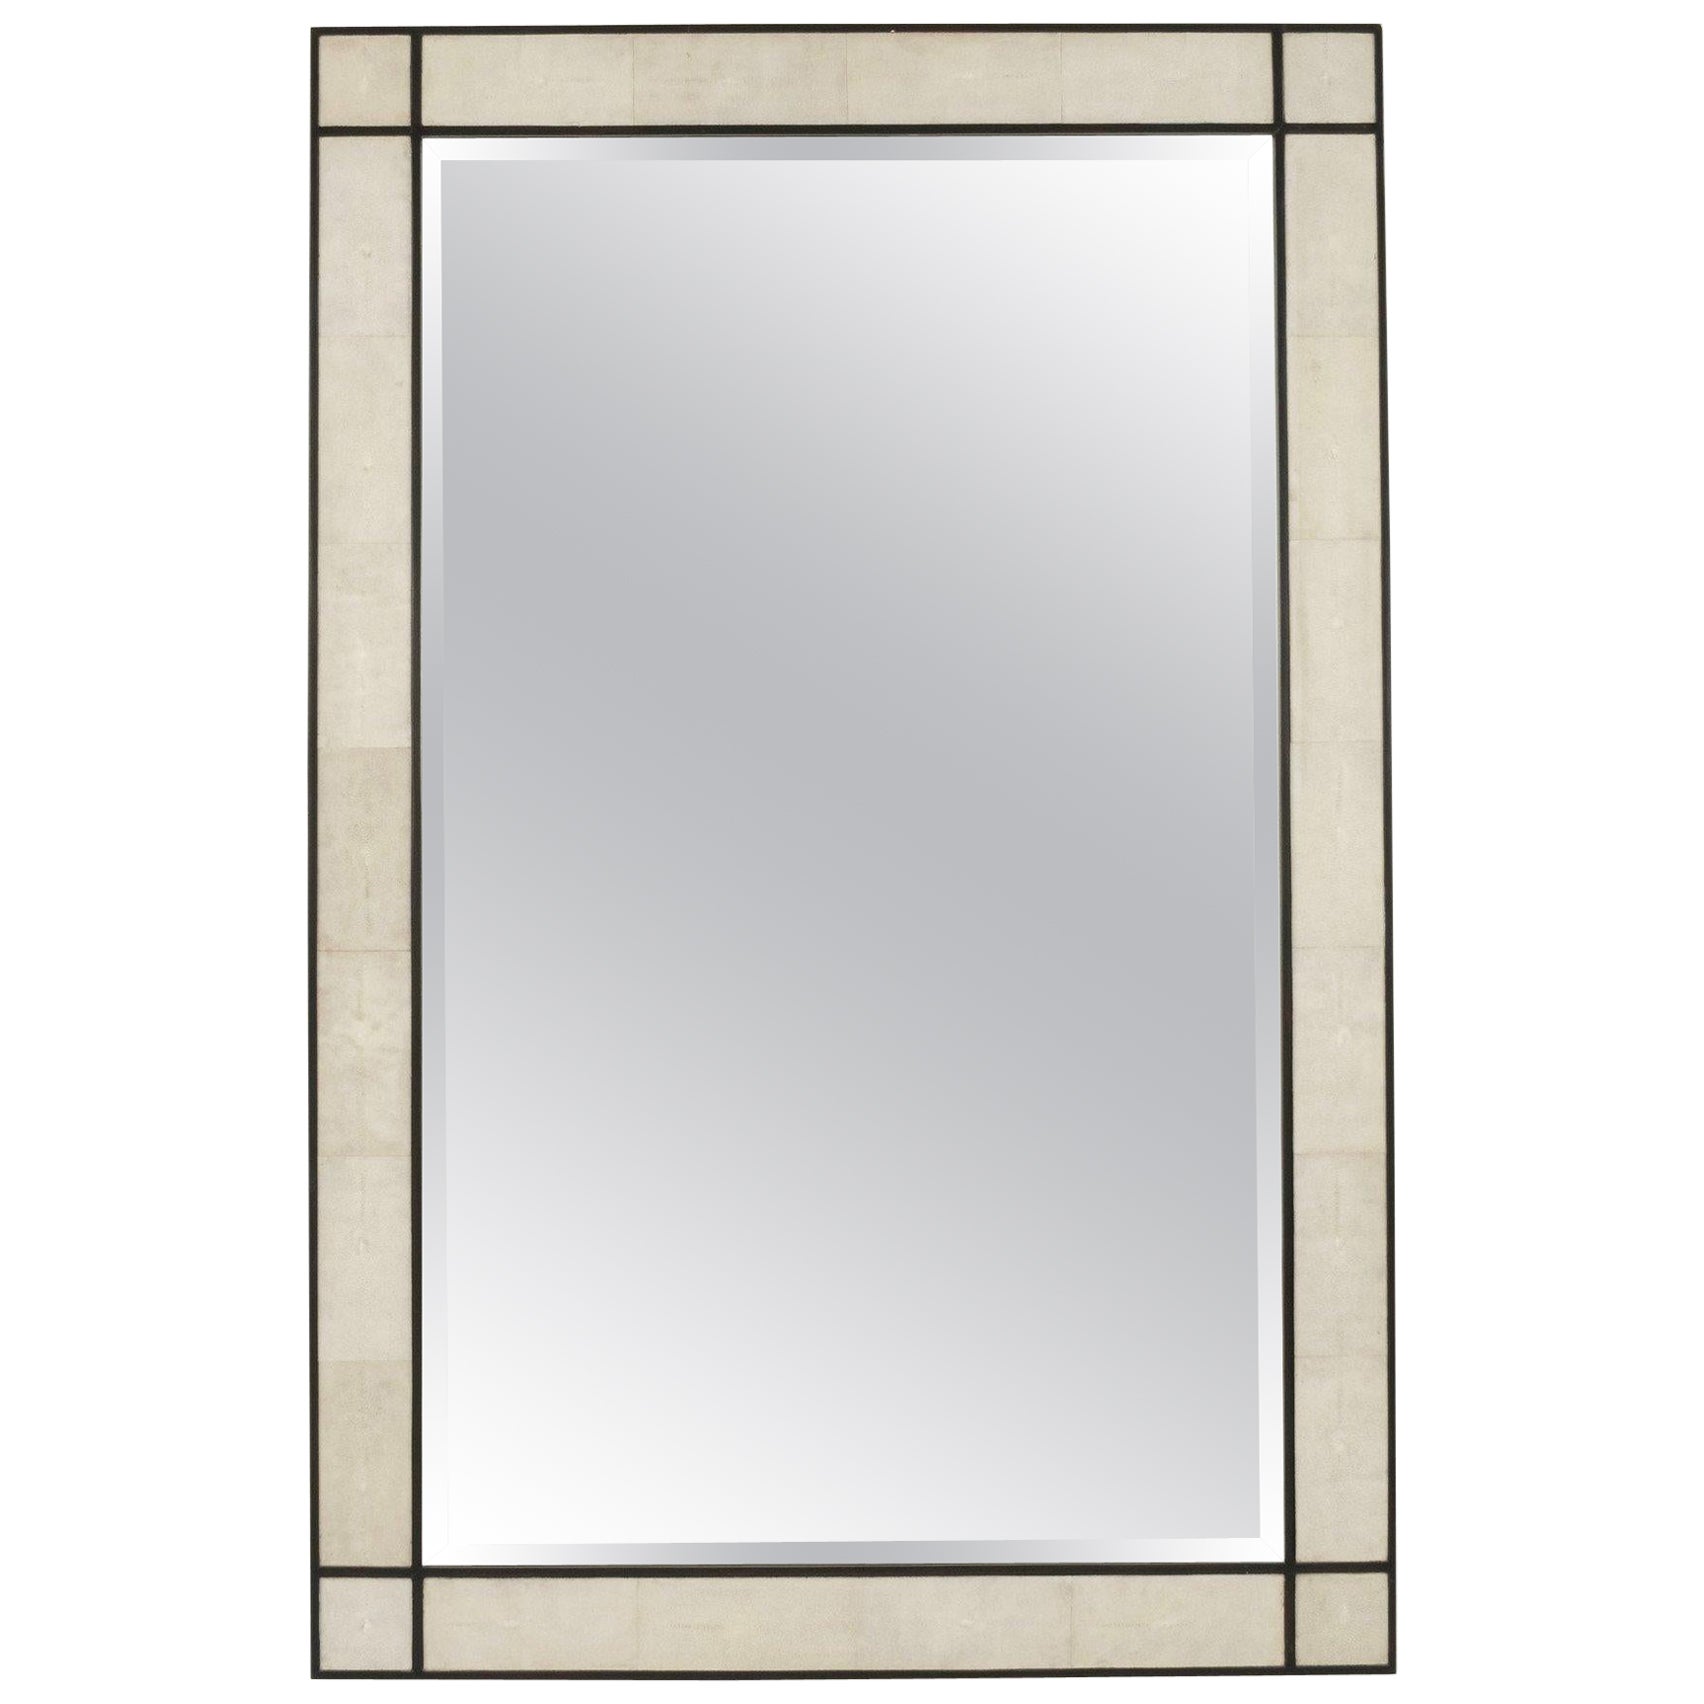 1970s Black White Shagreen Mirror